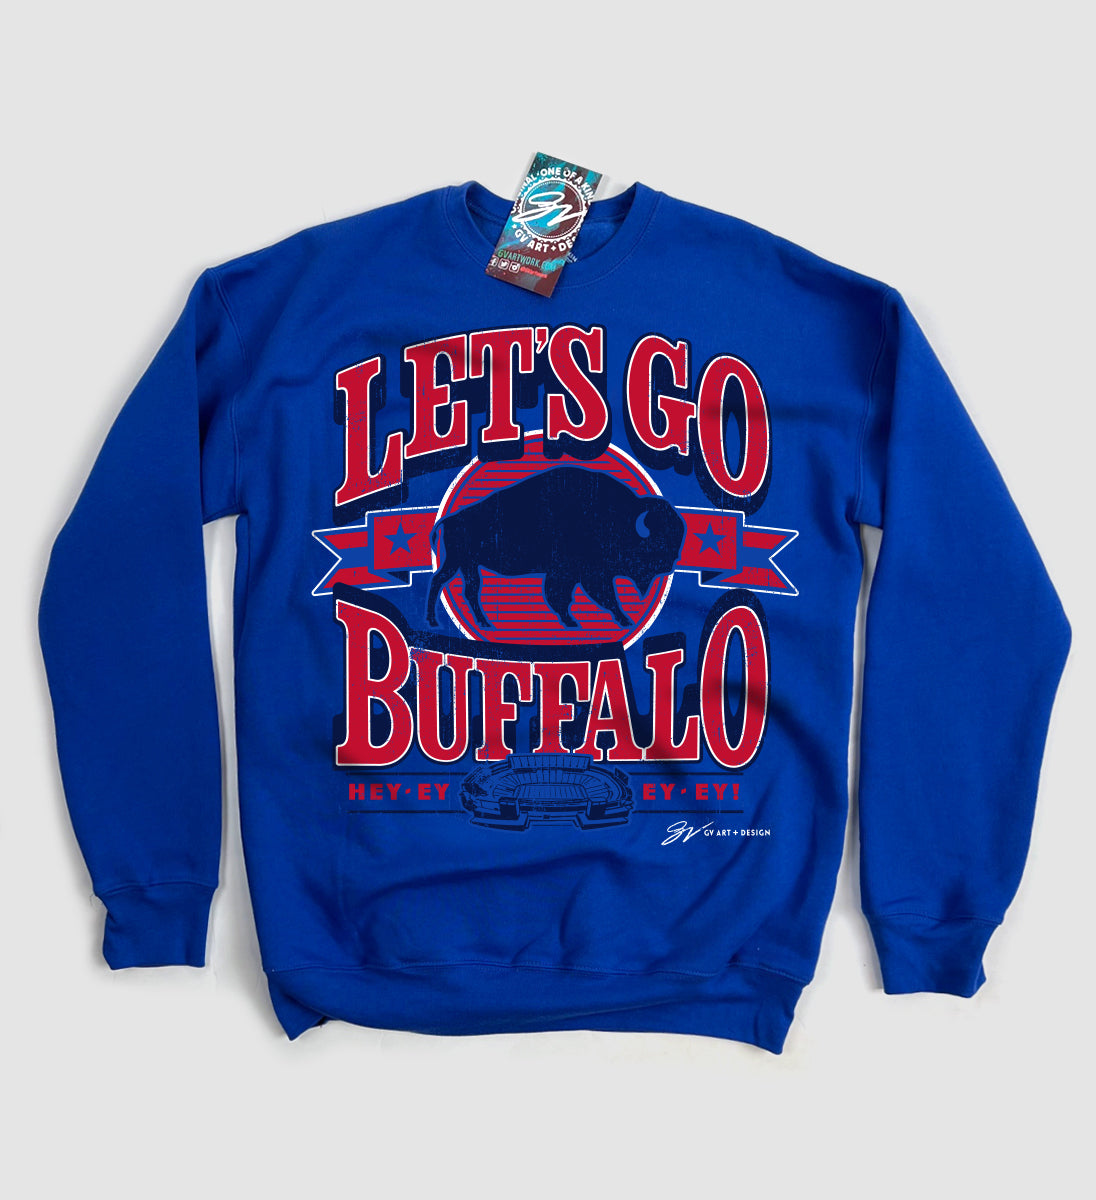 Let's Go Buffalo Vintage Crew Sweatshirt